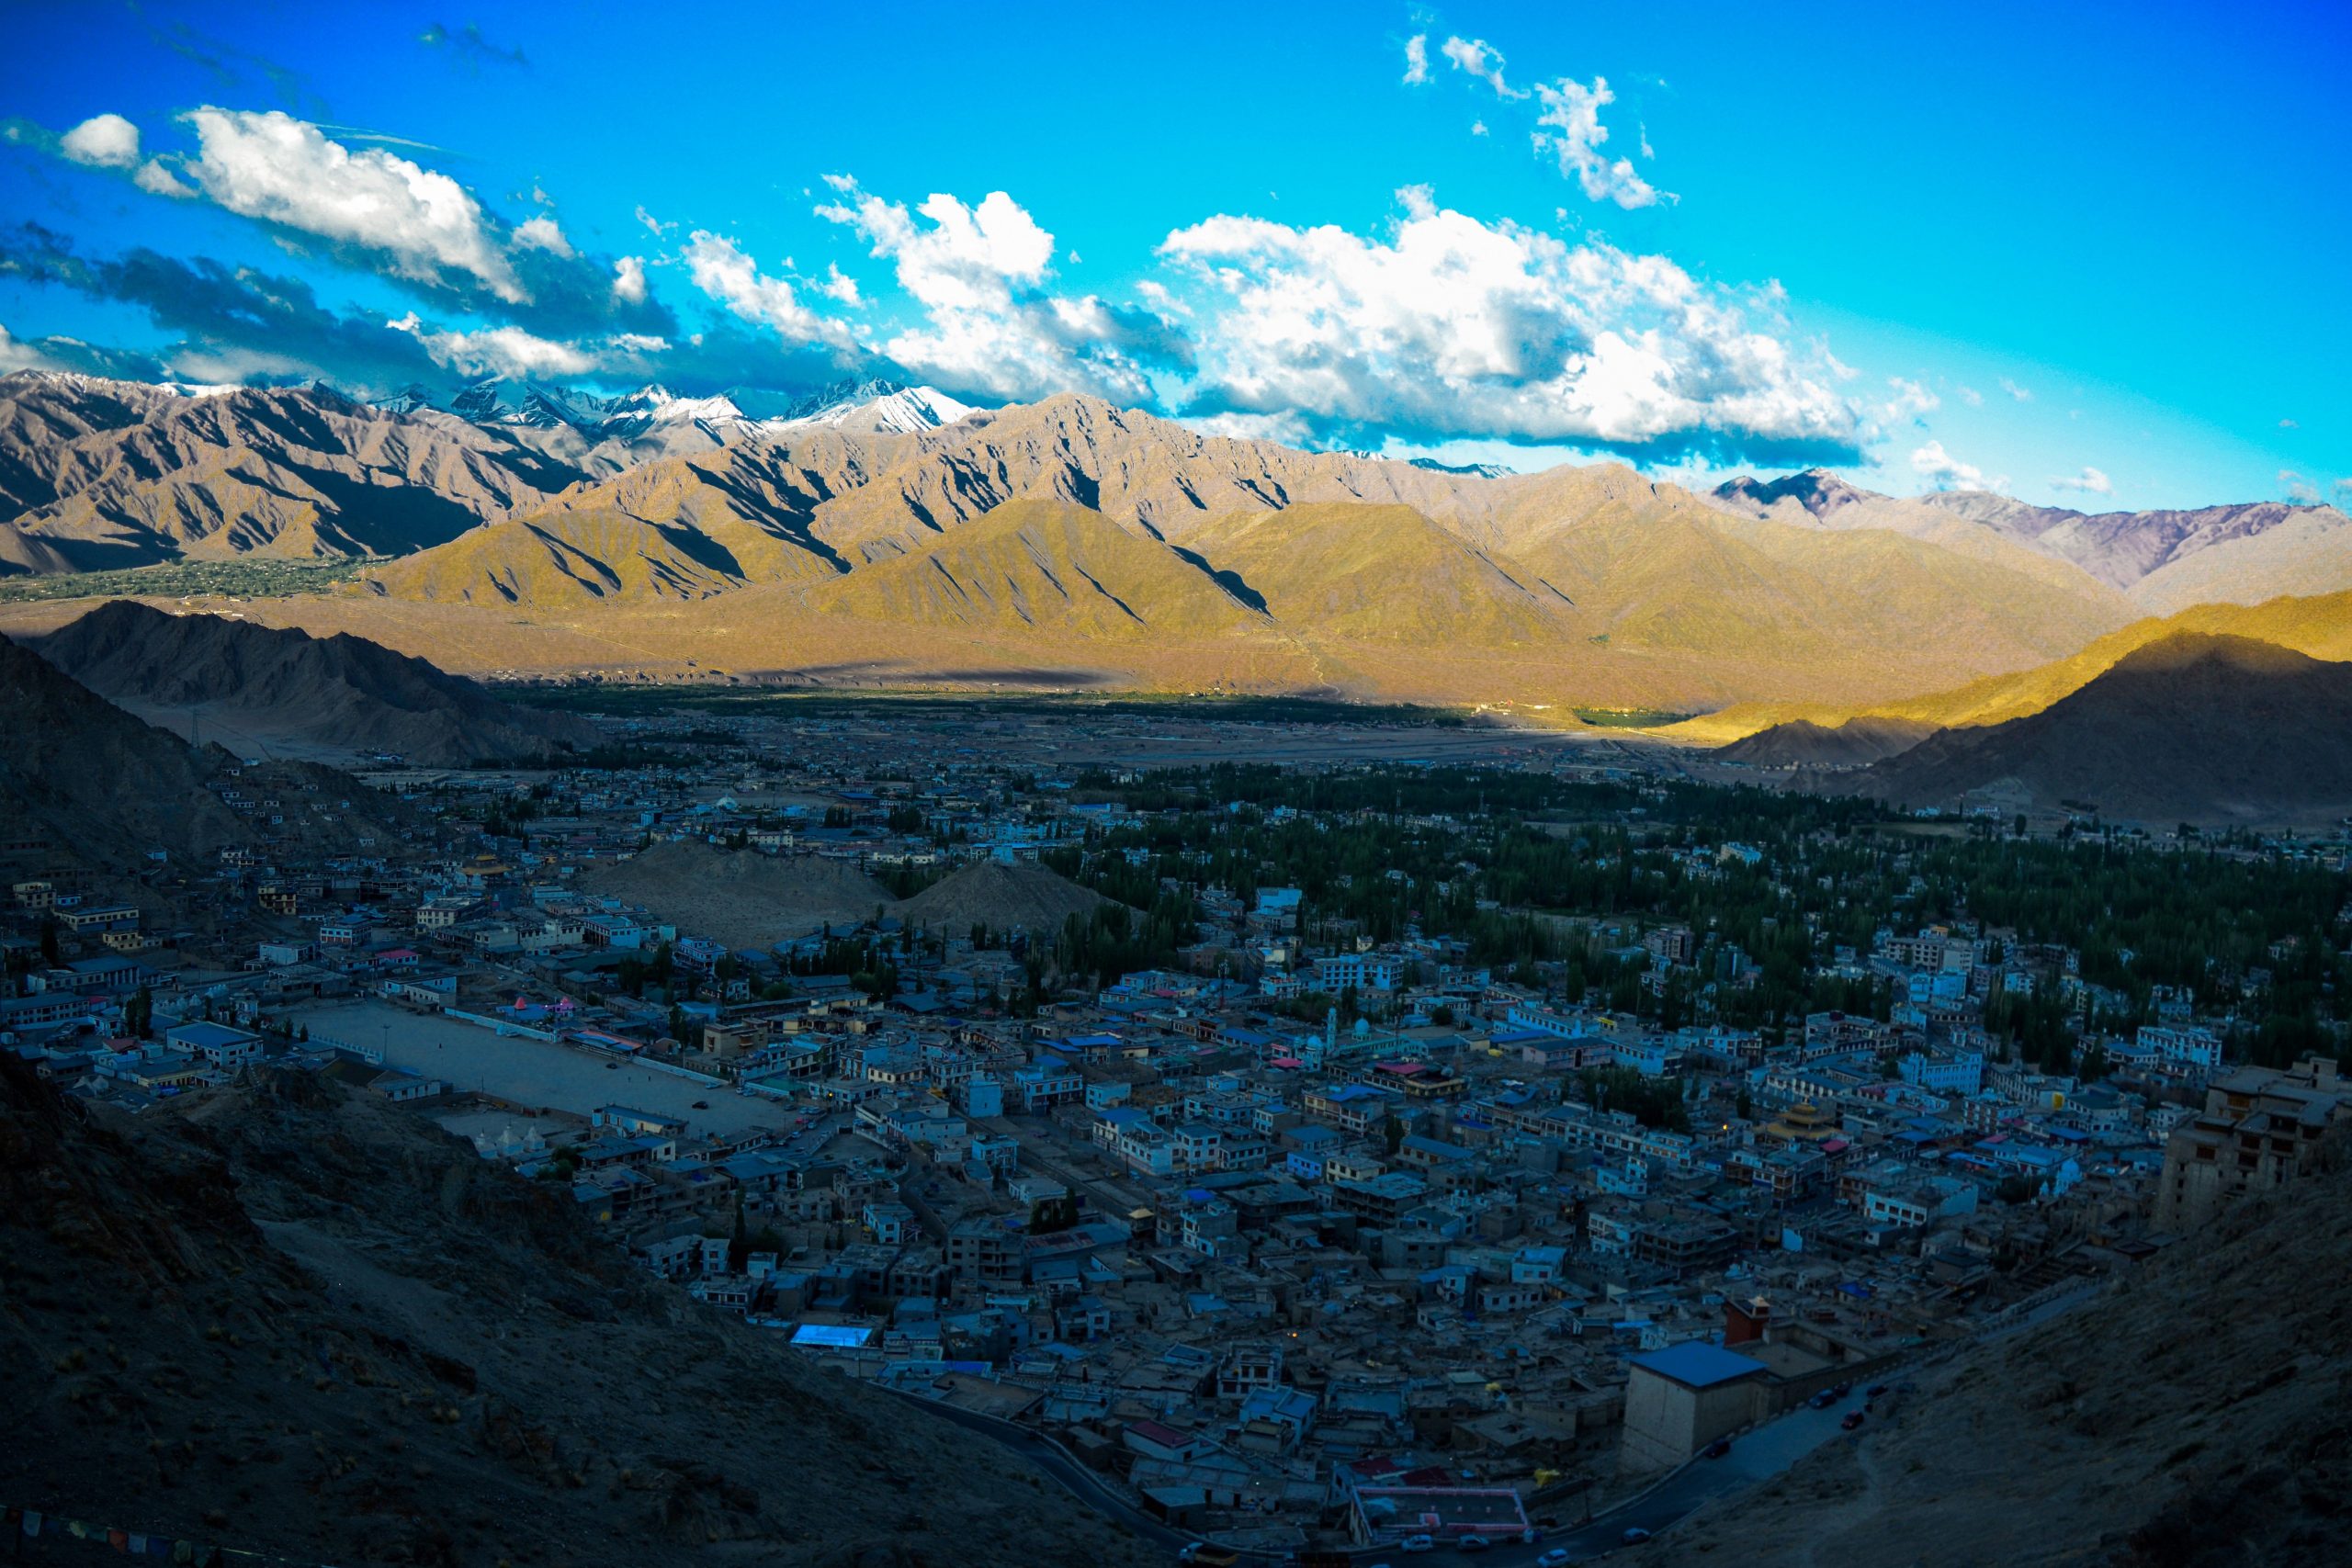 World’s highest road built in Ladakh at 19,300 feet